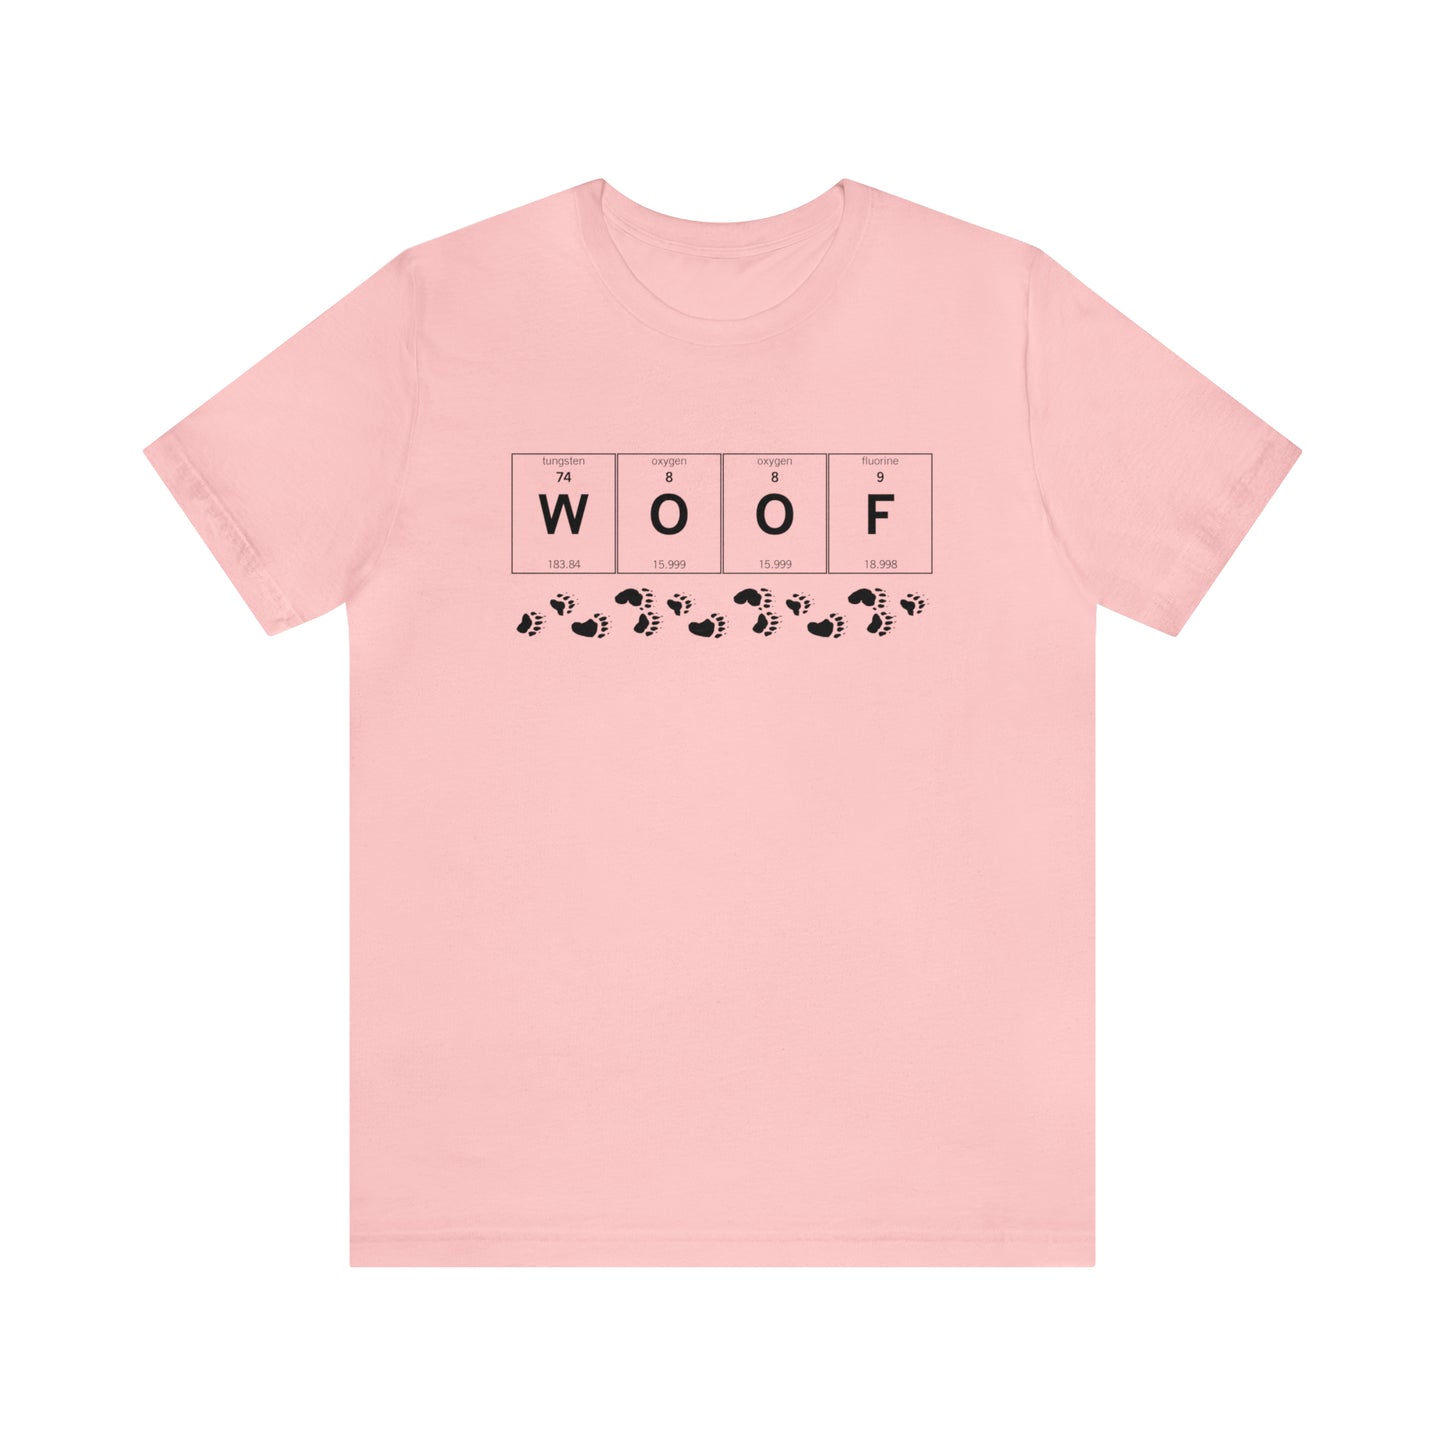 WOOF Camiseta de manga corta unisex con diseño de oso gay de tabla periódica